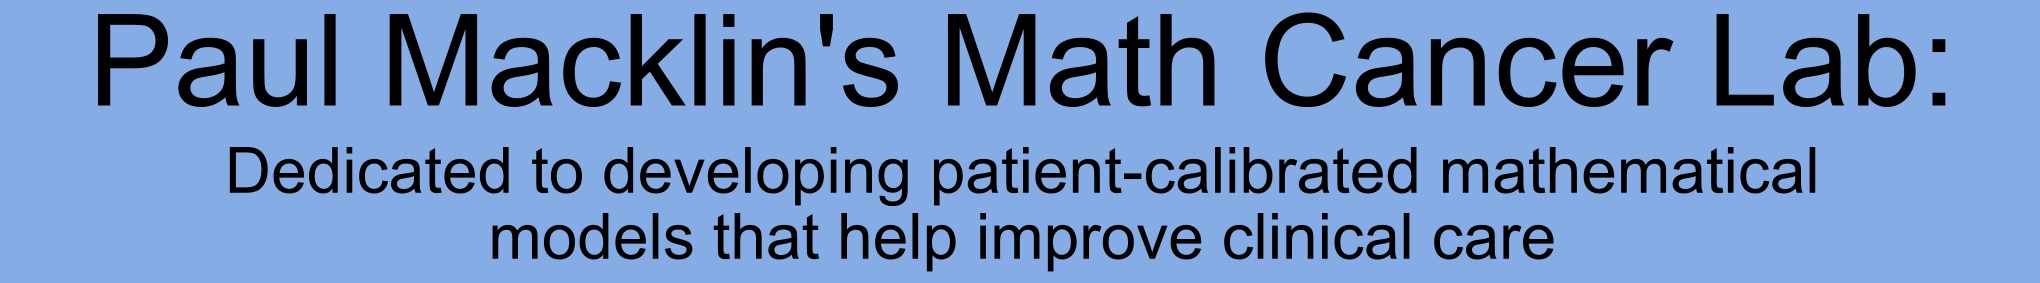 Paul Macklin's Math Cancer Lab Website